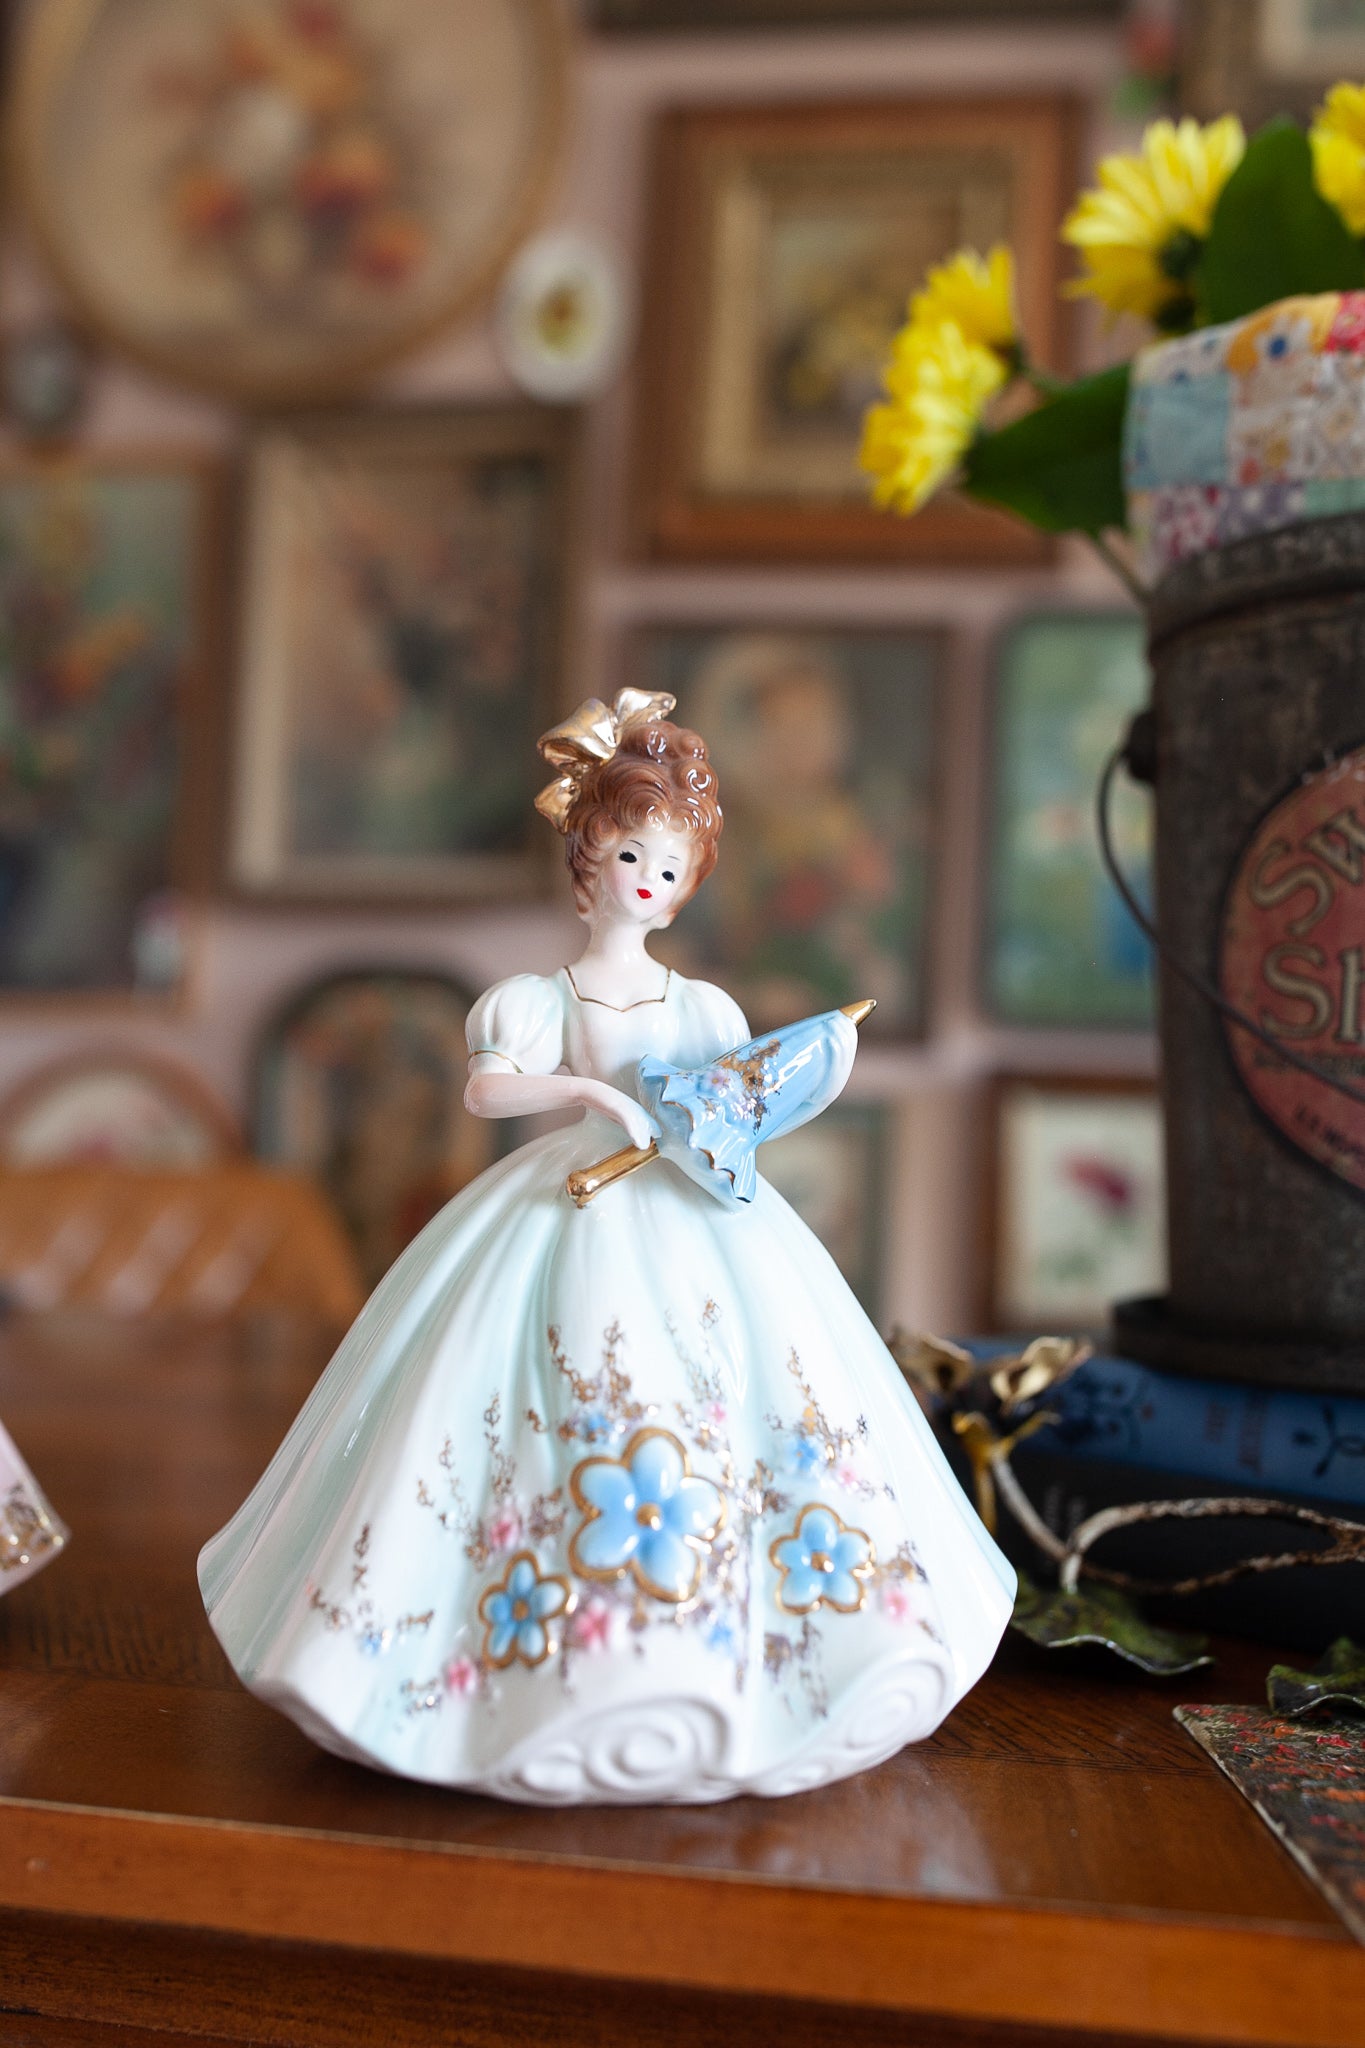 Josef Originals Figurine - White and Blue Parasol Porcelain Lady - Love Makes the World Go Round Series